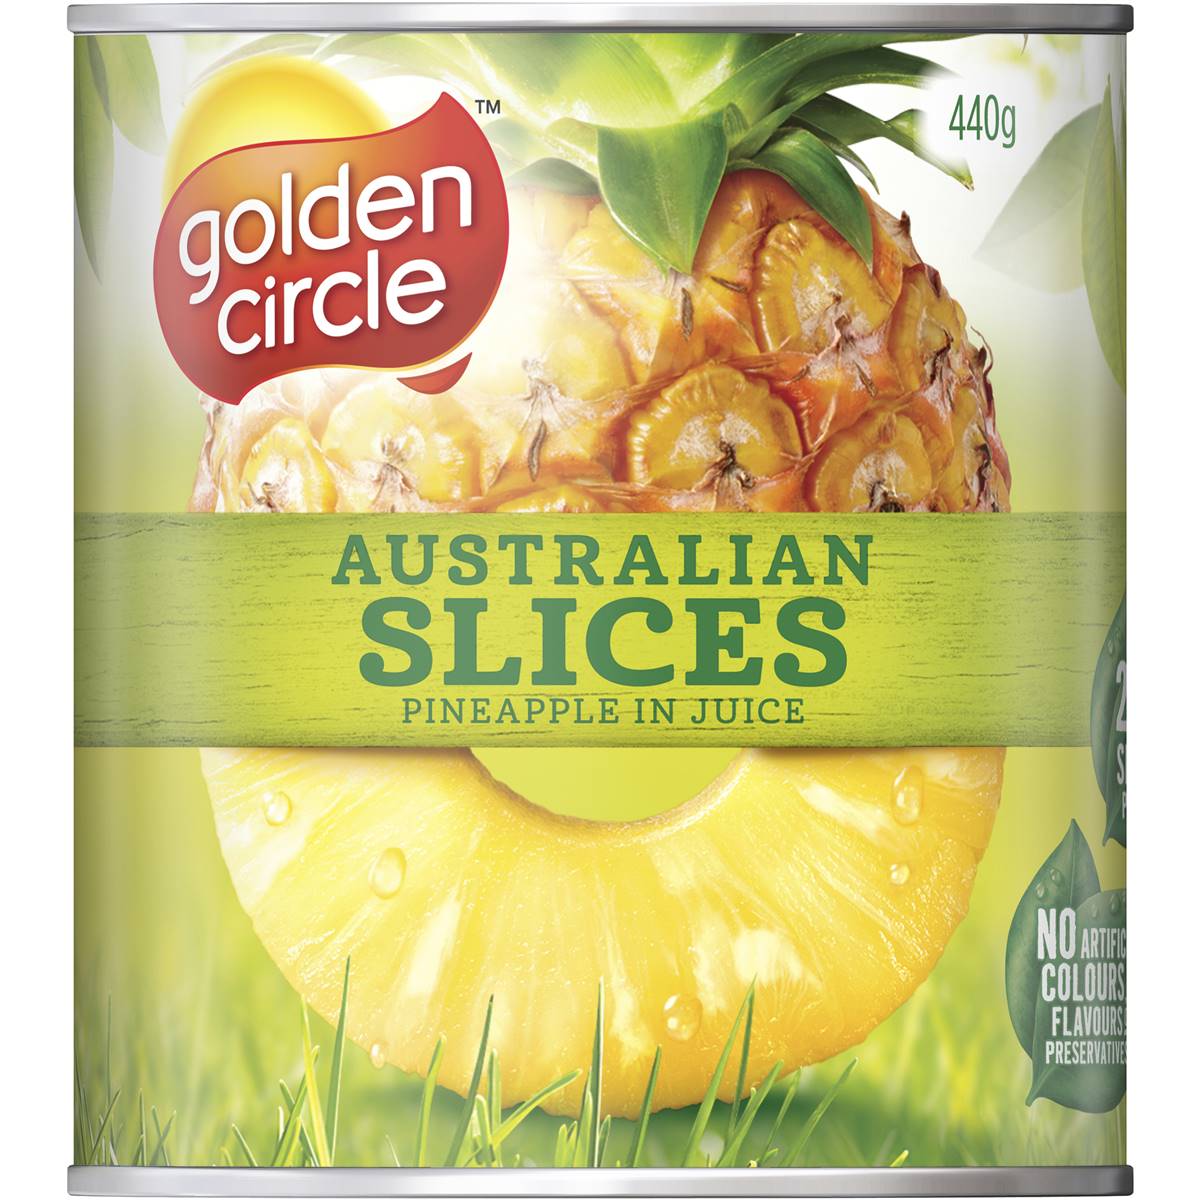 Golden Circle Pineapple Sliced in Juice 440g